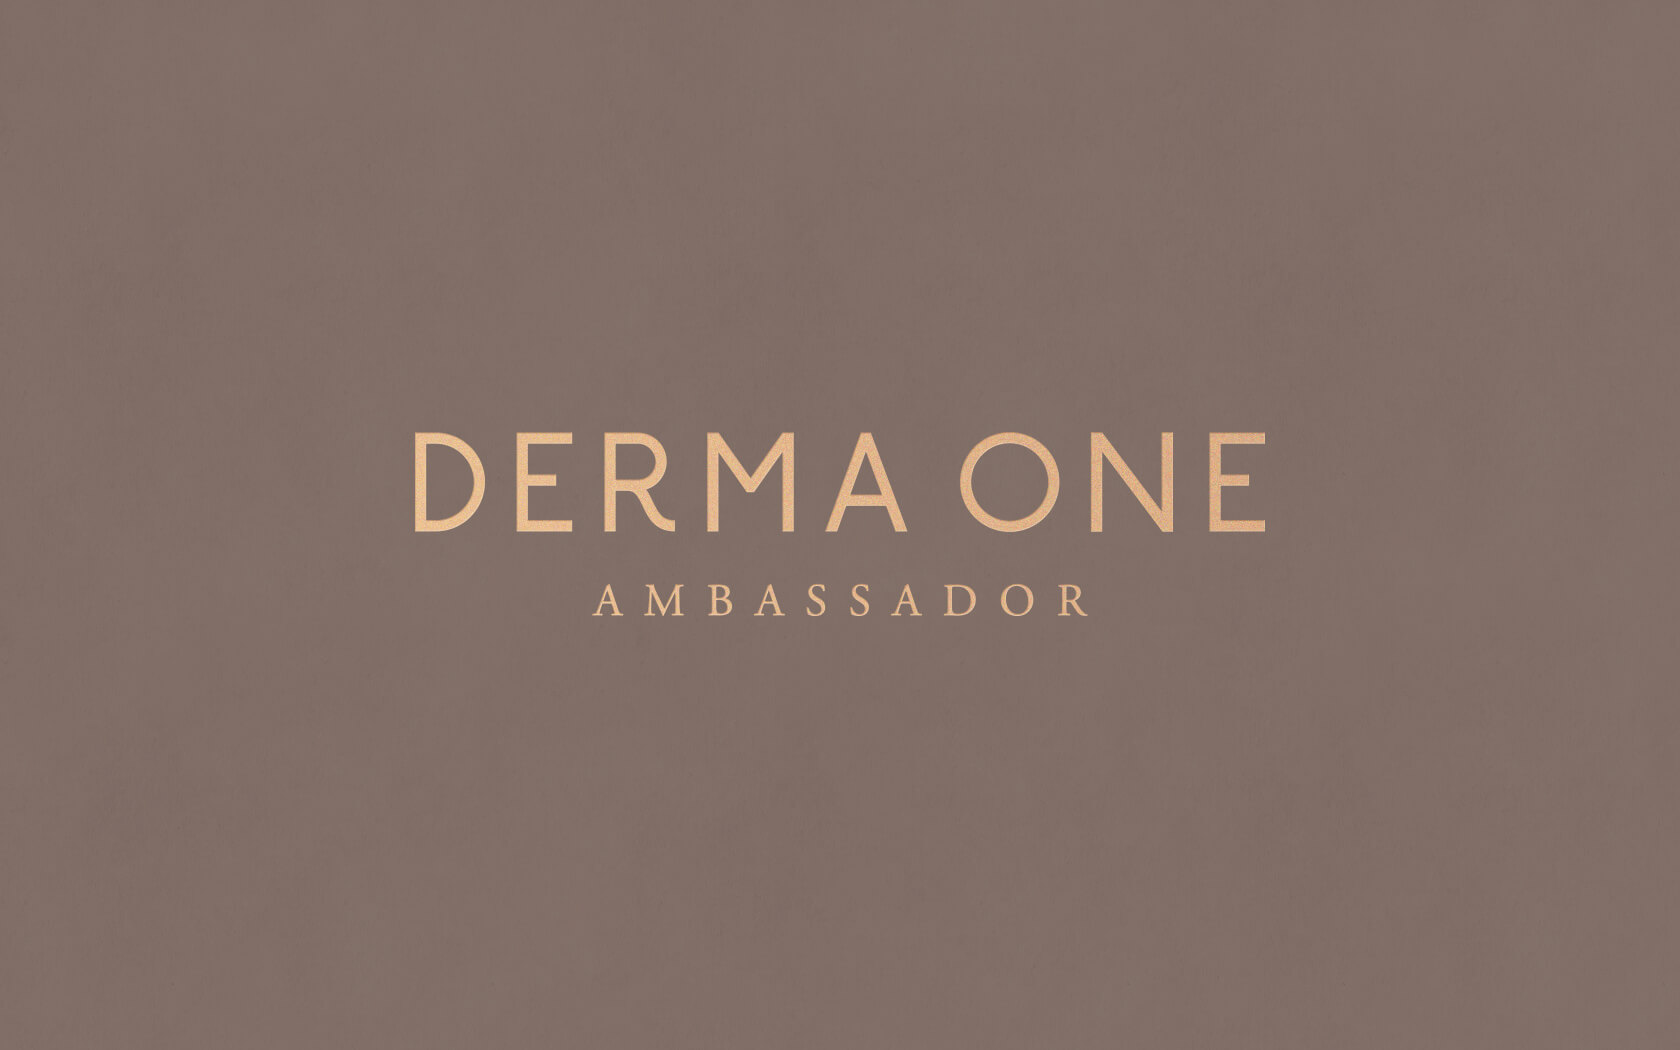 Derma One. Brand logo with Ambassador